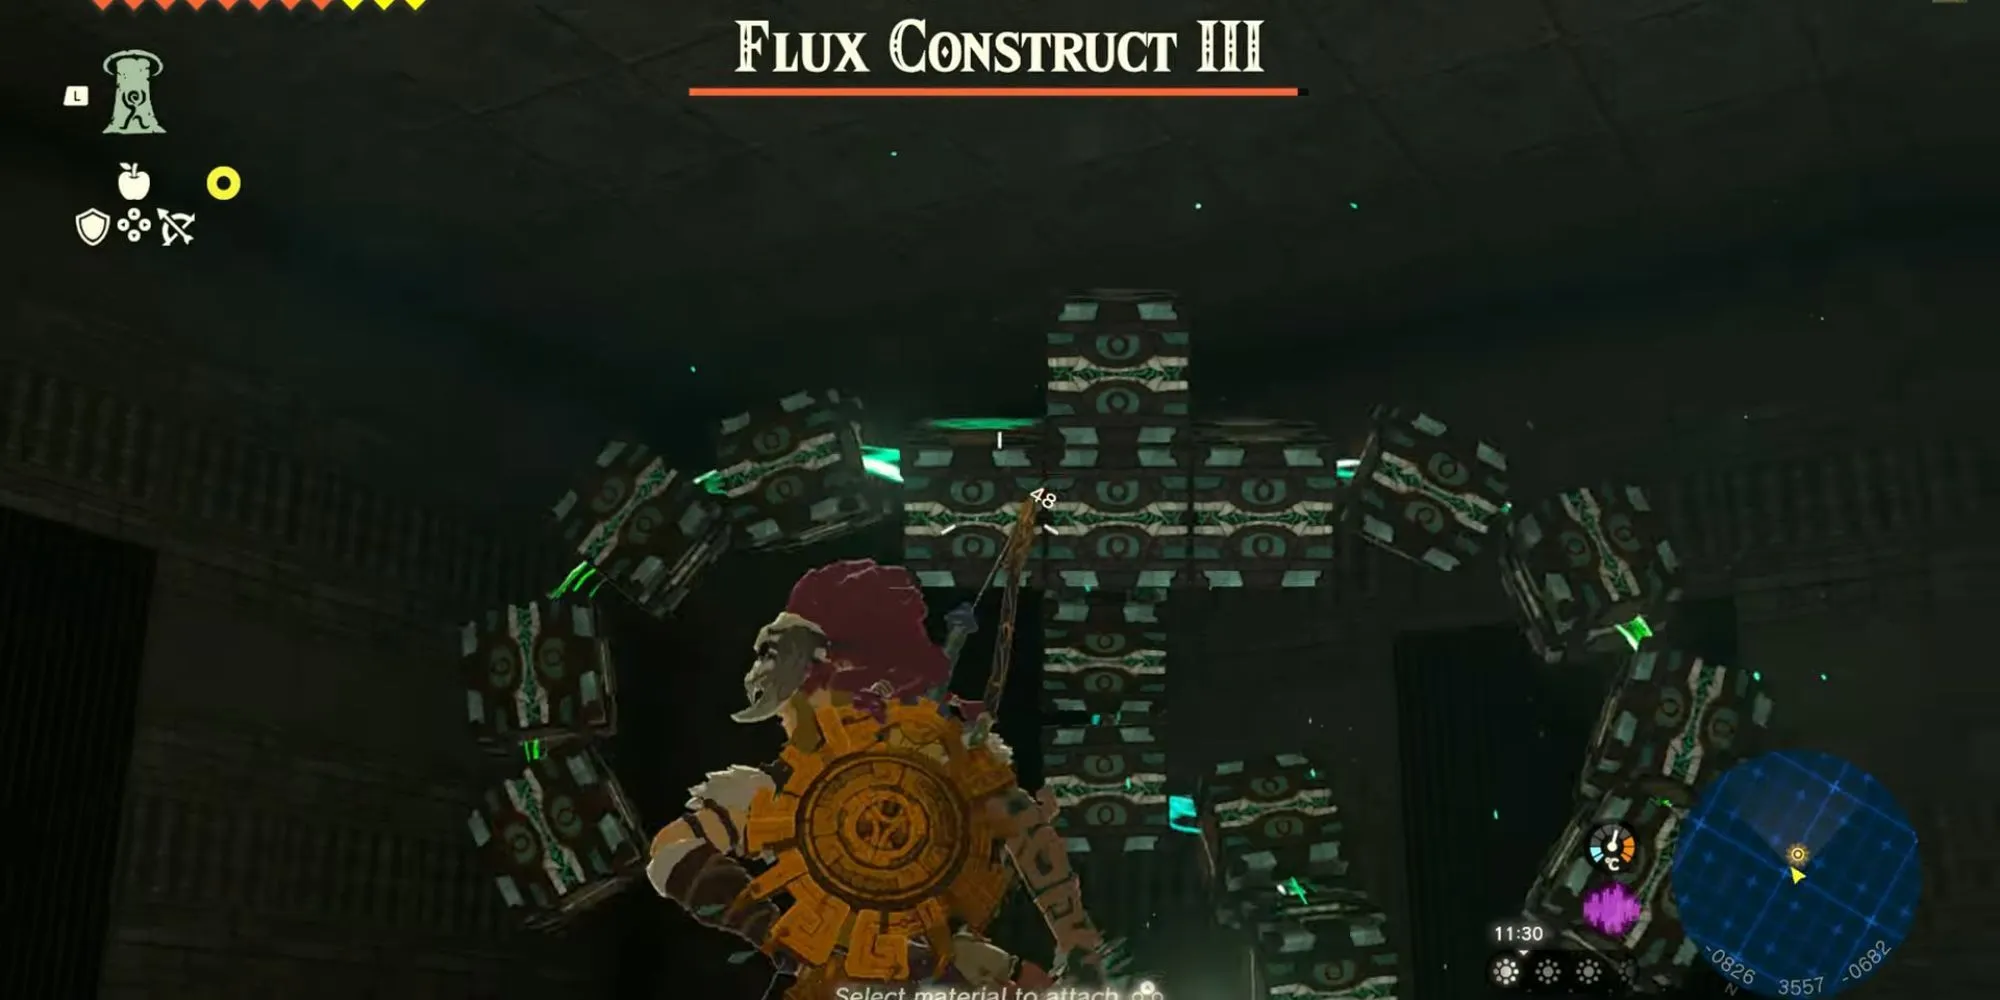 Legend of Zelda lágrimas do reino Labyrinth Flux Construct III